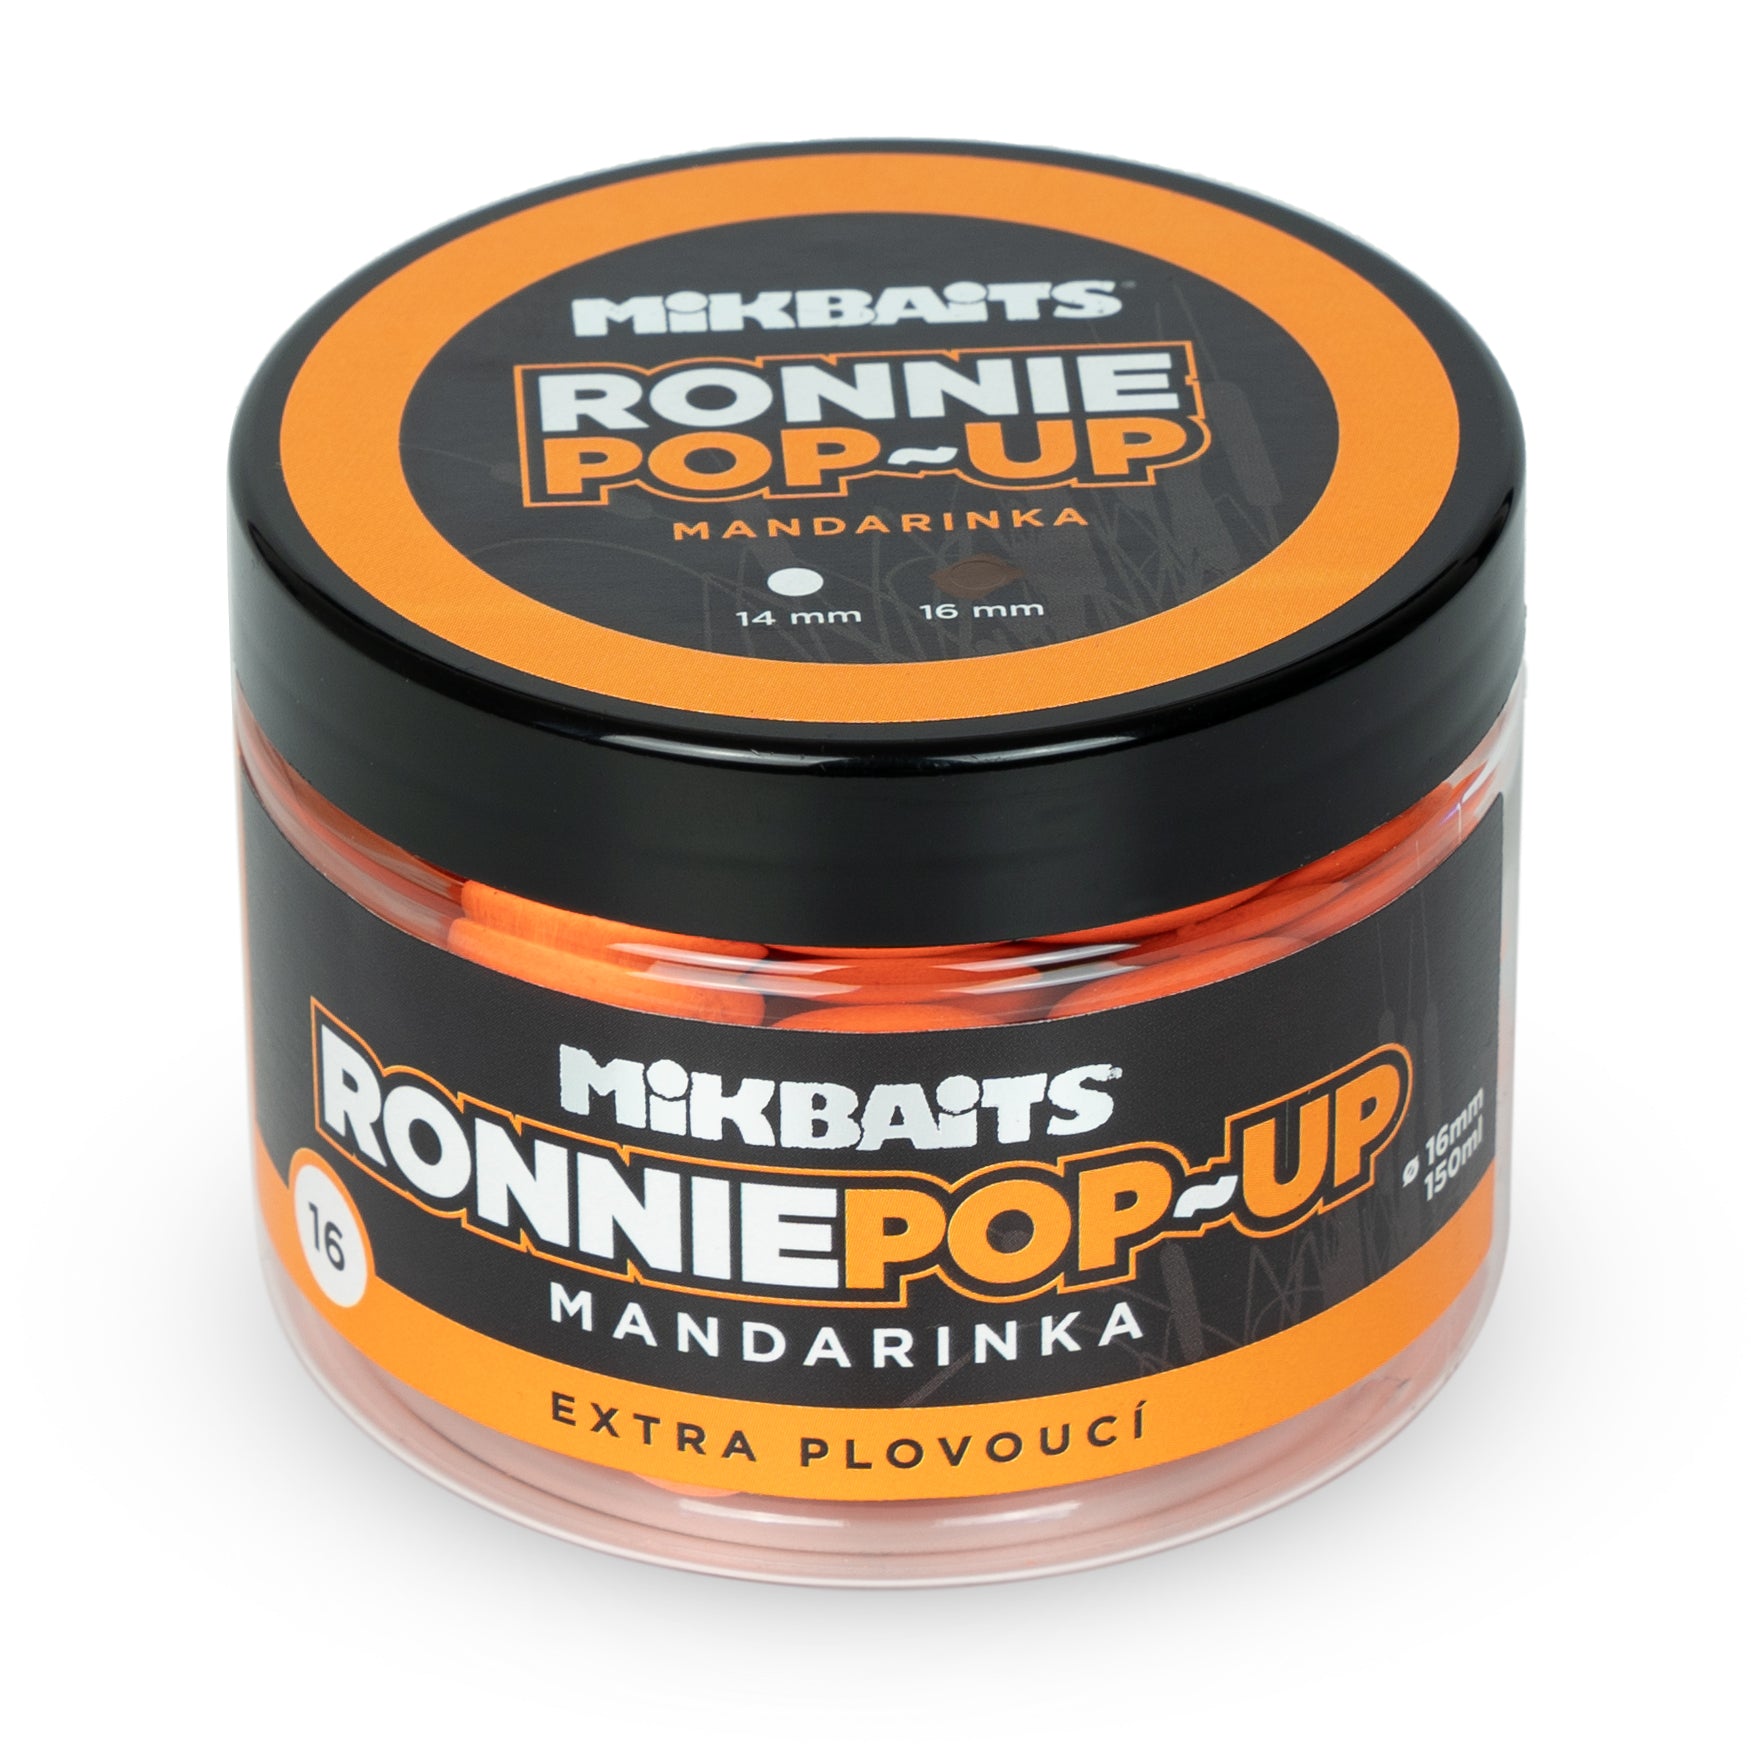 Mikbaits Ronnie pop-up 150ml Mandarinka